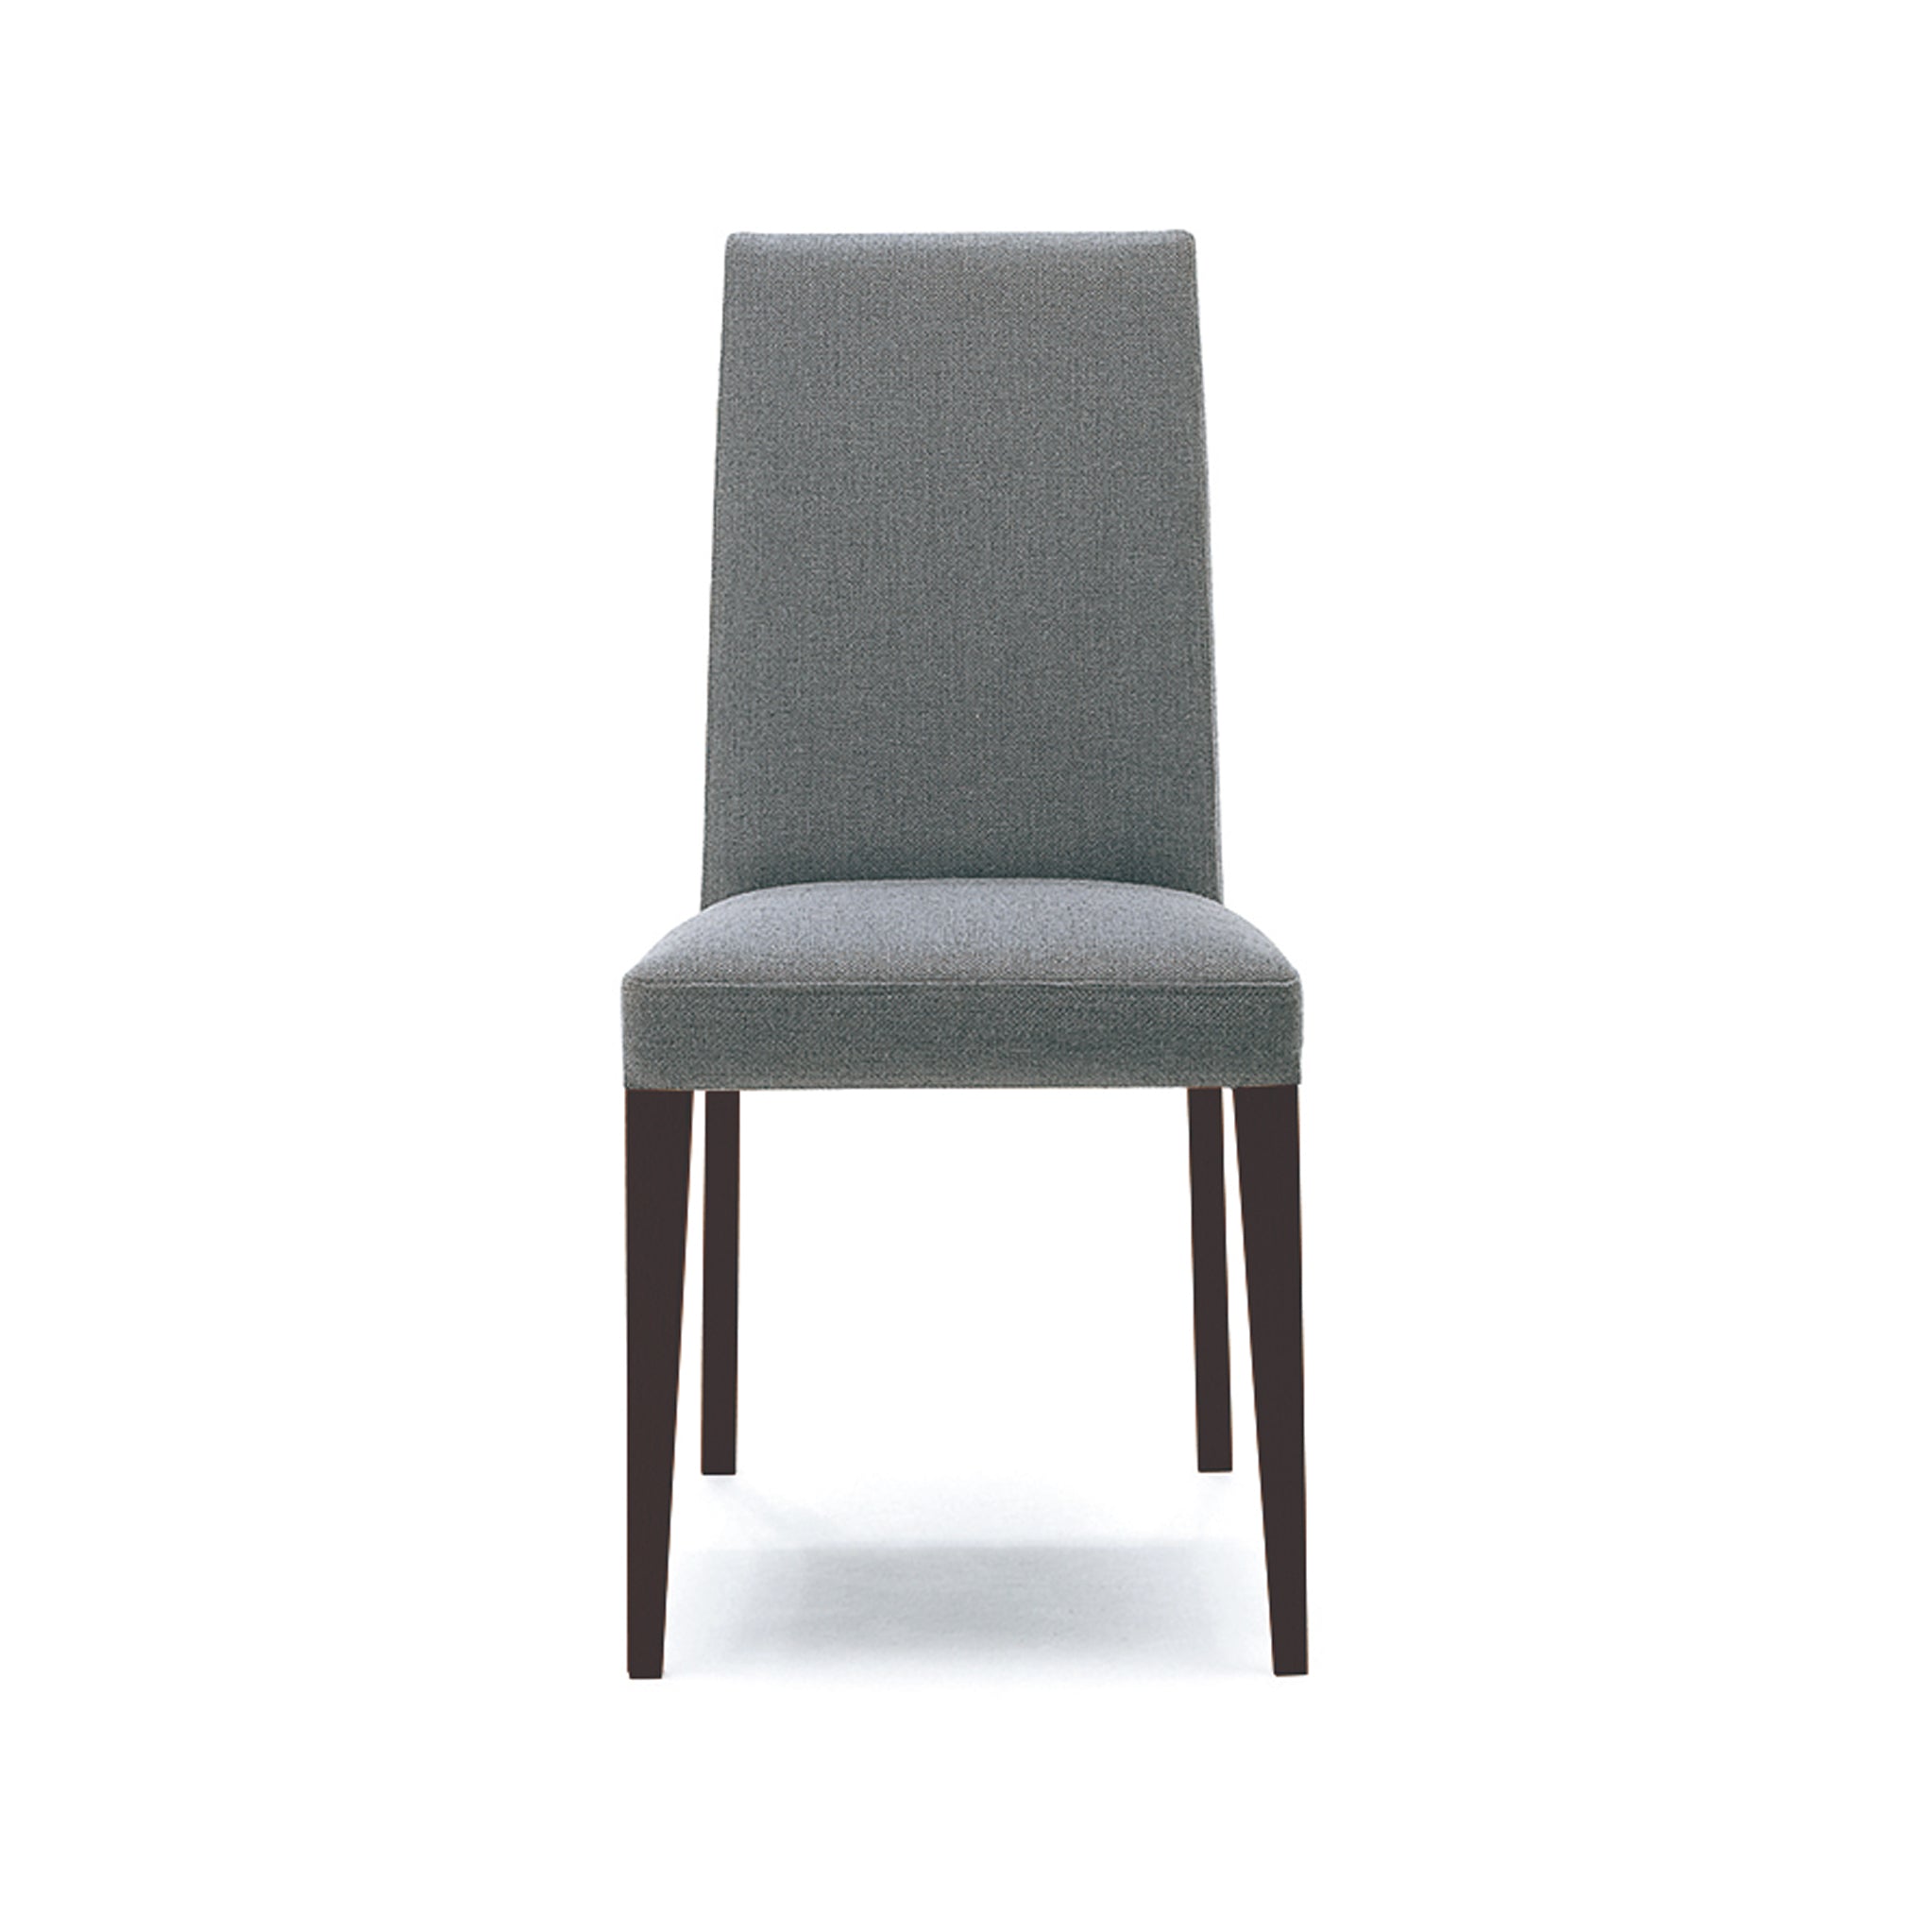 PM146_LEEVEN_side chair – ROCKSTONE